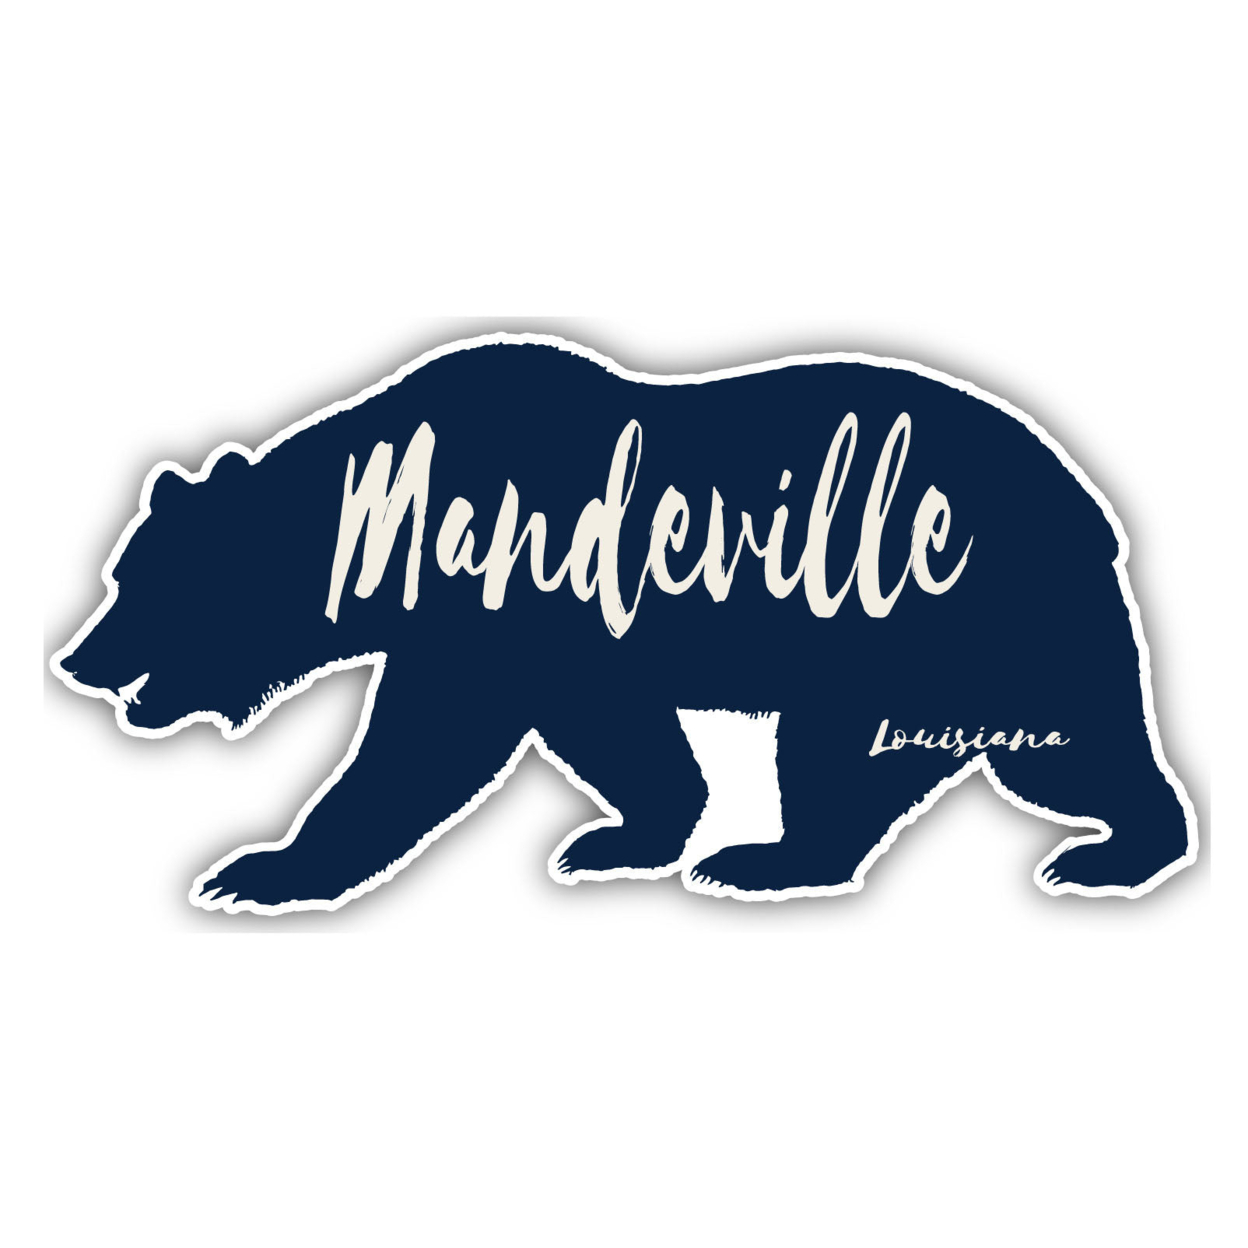 Mandeville Louisiana Souvenir Decorative Stickers (Choose Theme And Size) - 2-Inch, Camp Life